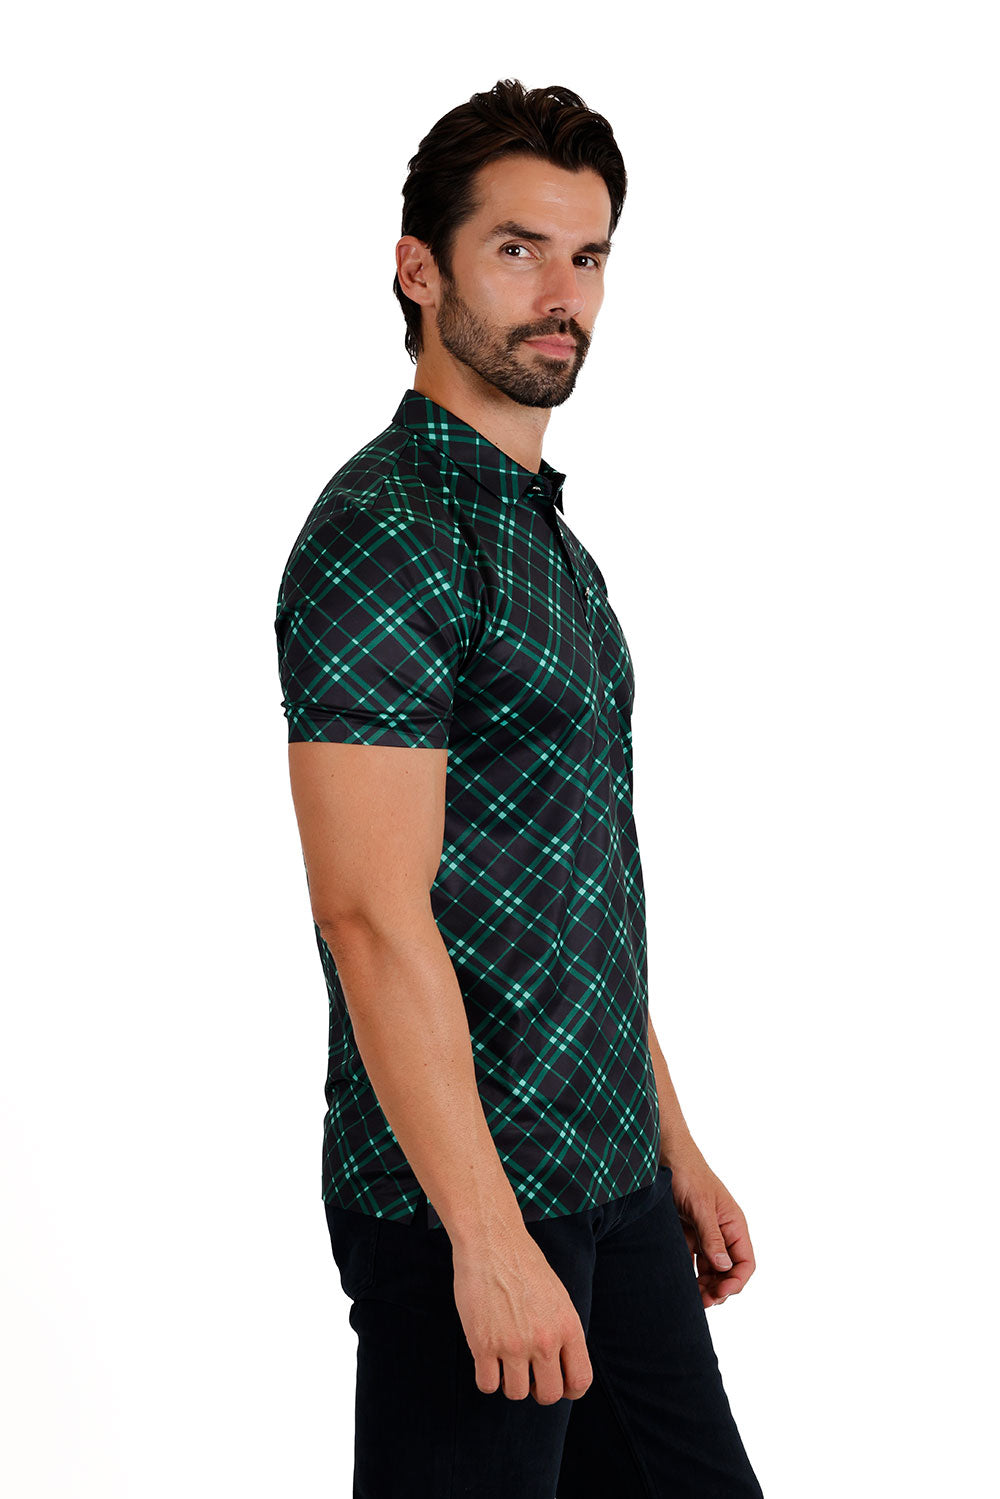 Barabas Men's Printed Shiny Diamond Polo Short Sleeve Shirts 3P06 Green Black